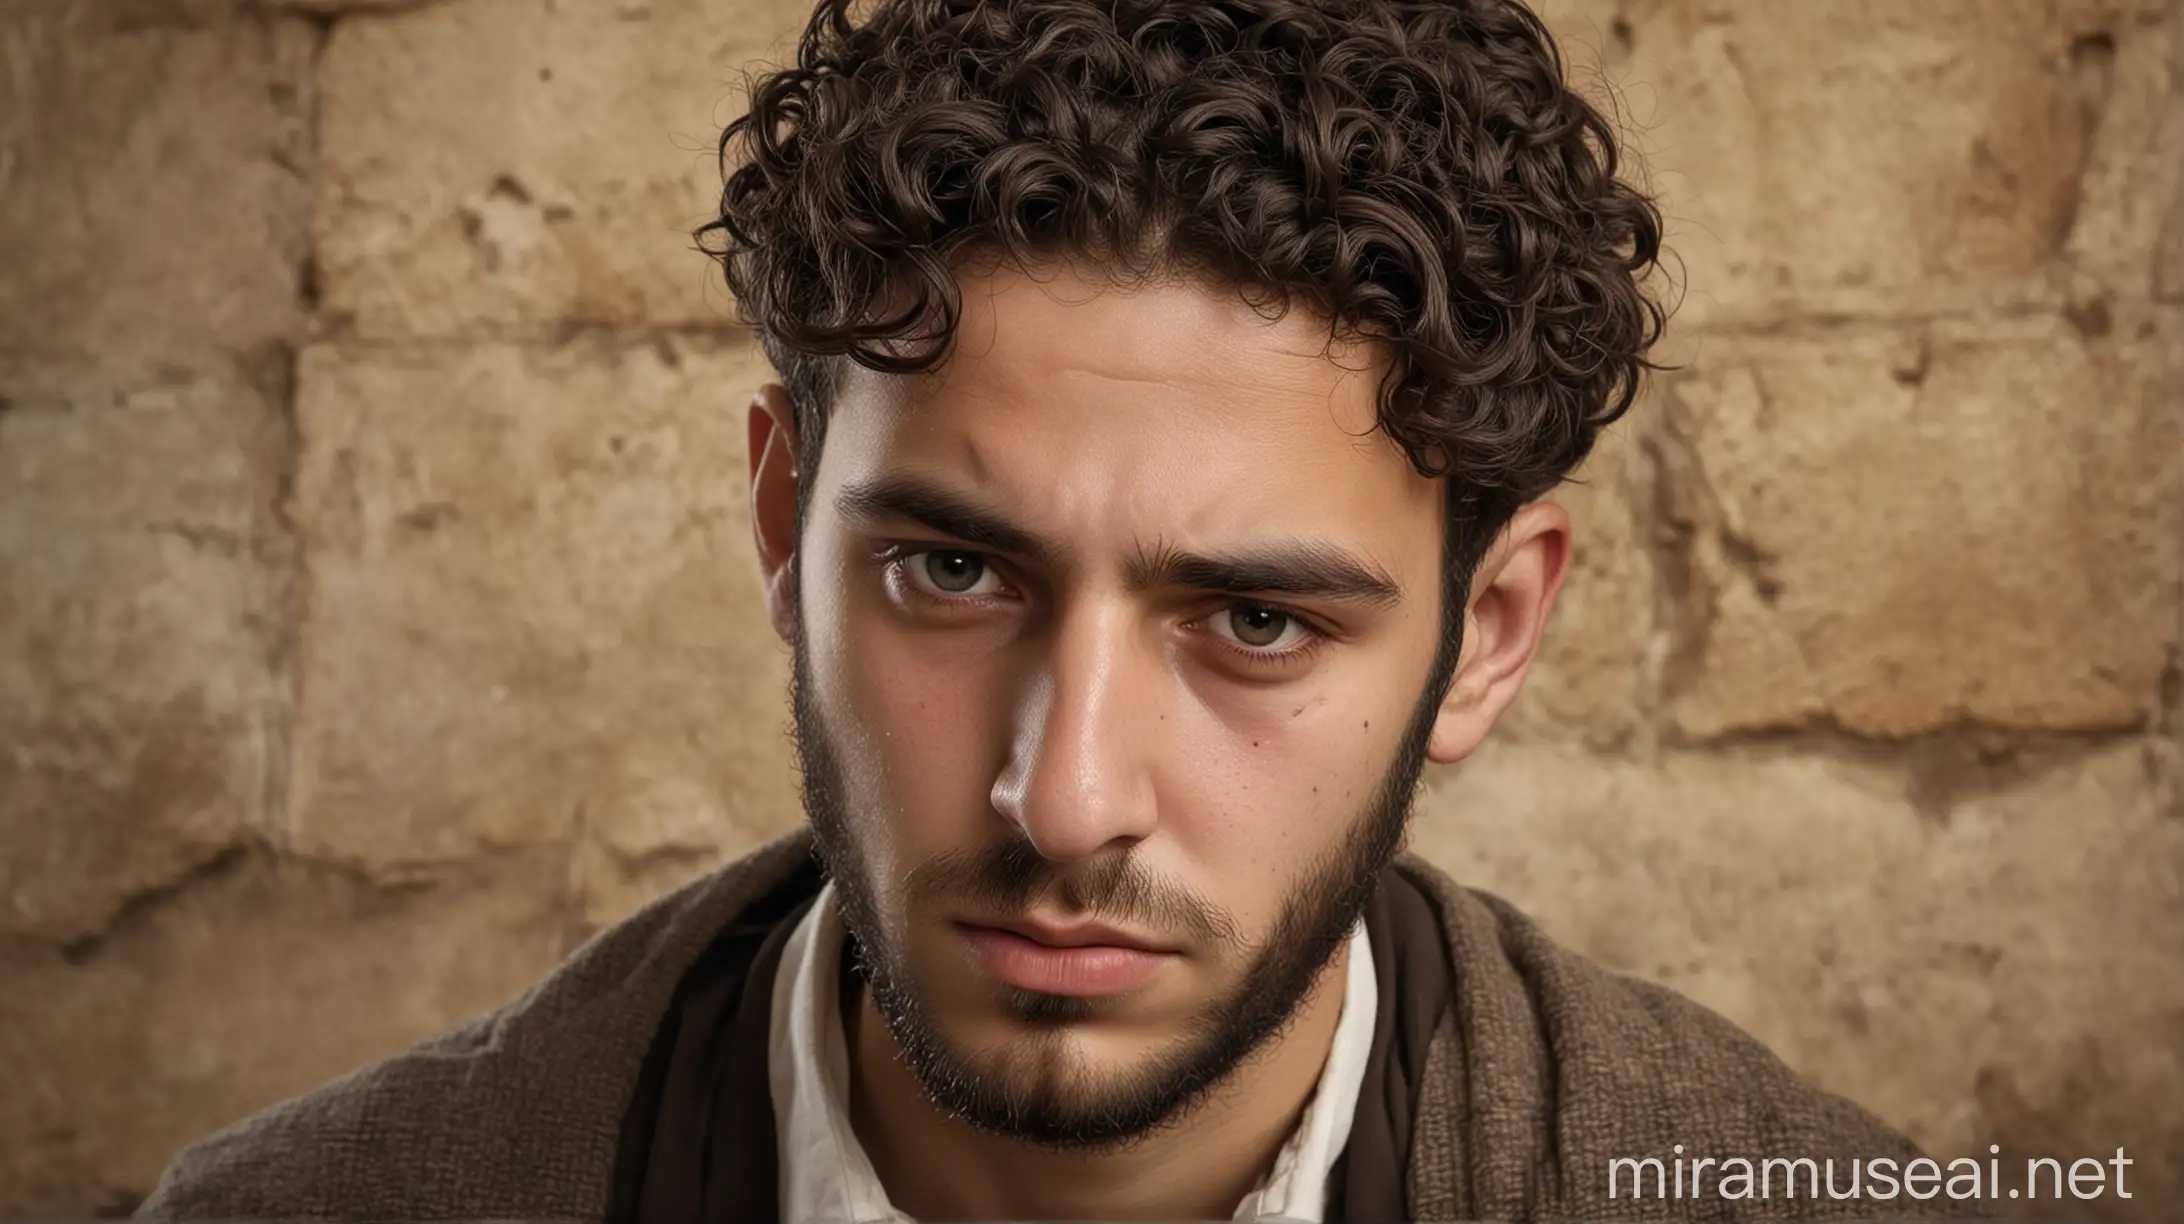 Sad looking Young Jewish man in ancient Jew